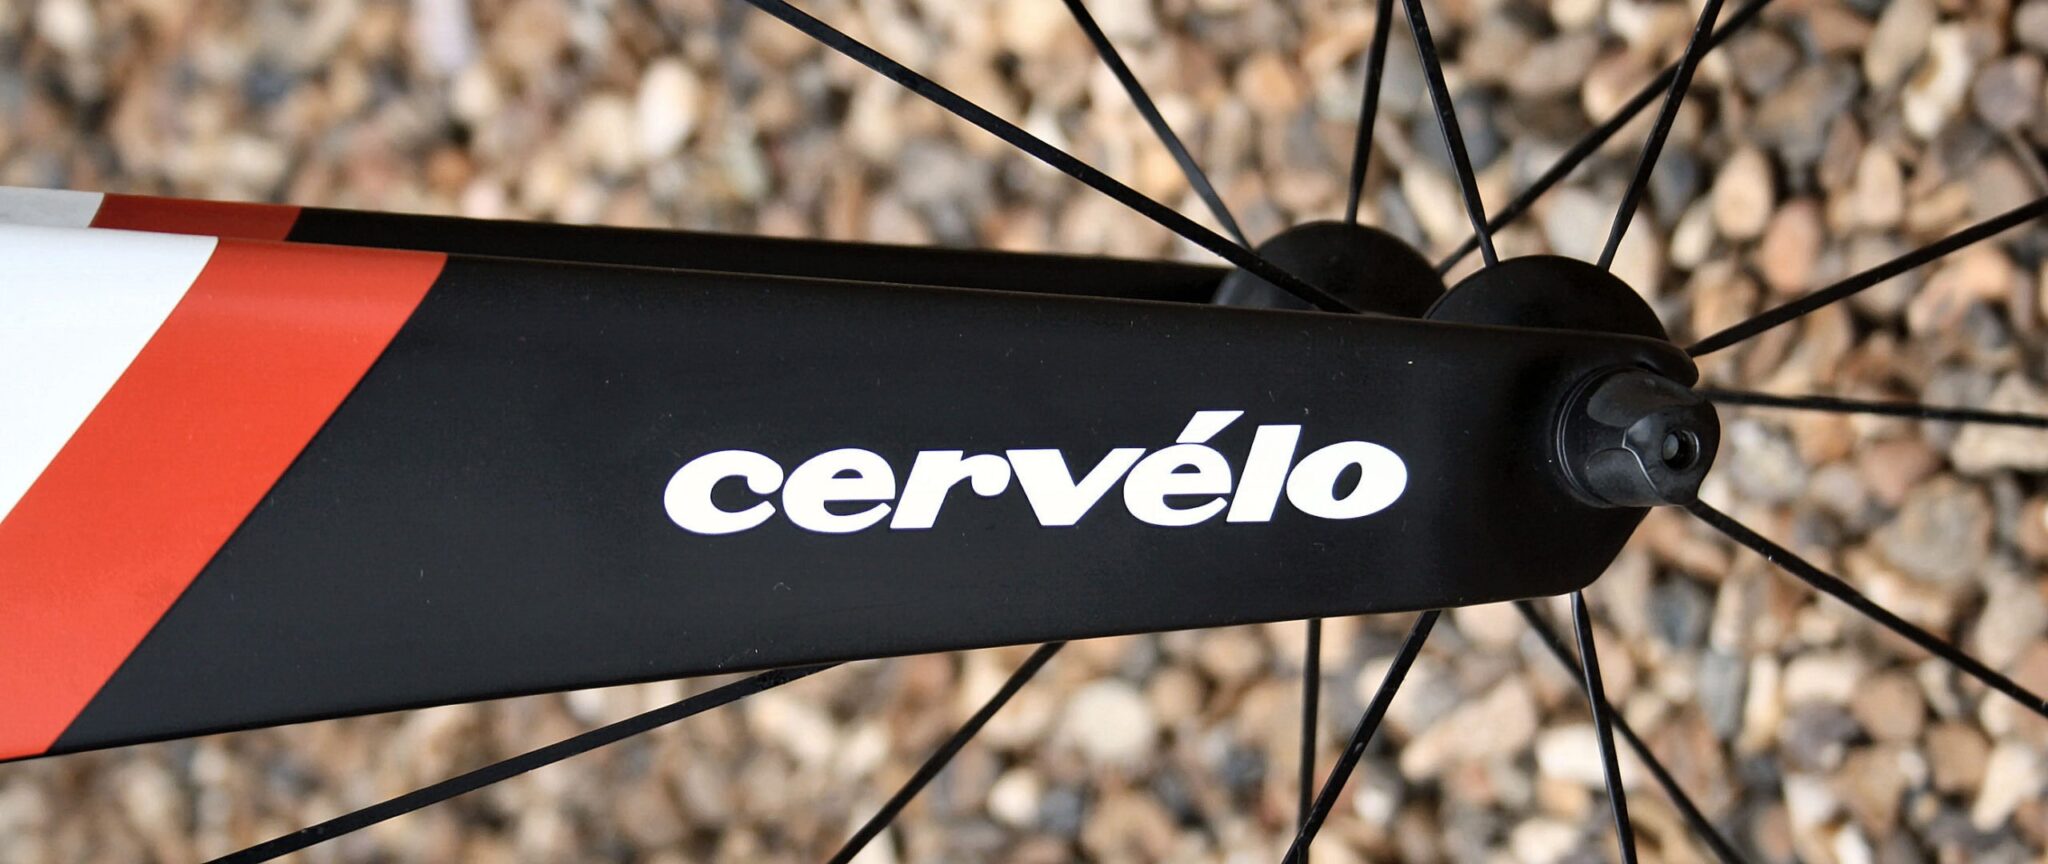 Cervelo P5 - my new TT bike in review